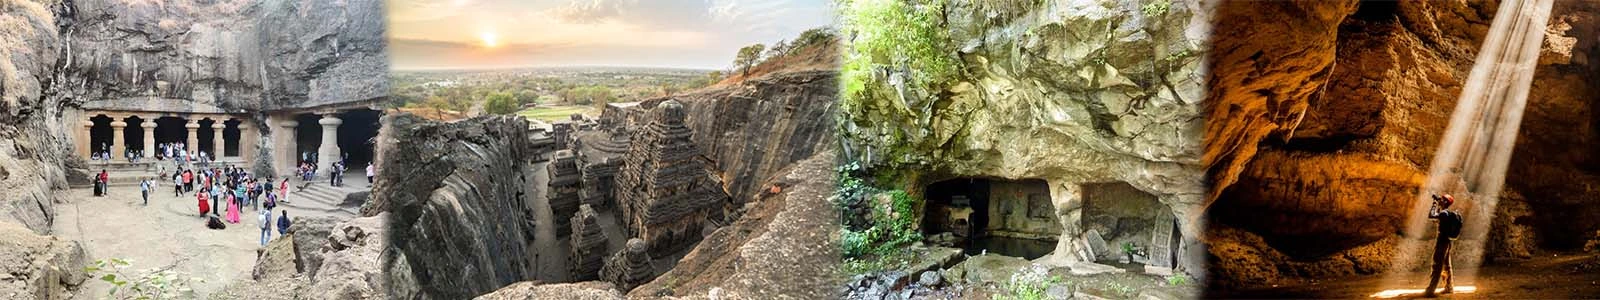 Maharashtra Sacred Caves and Adventure Tour